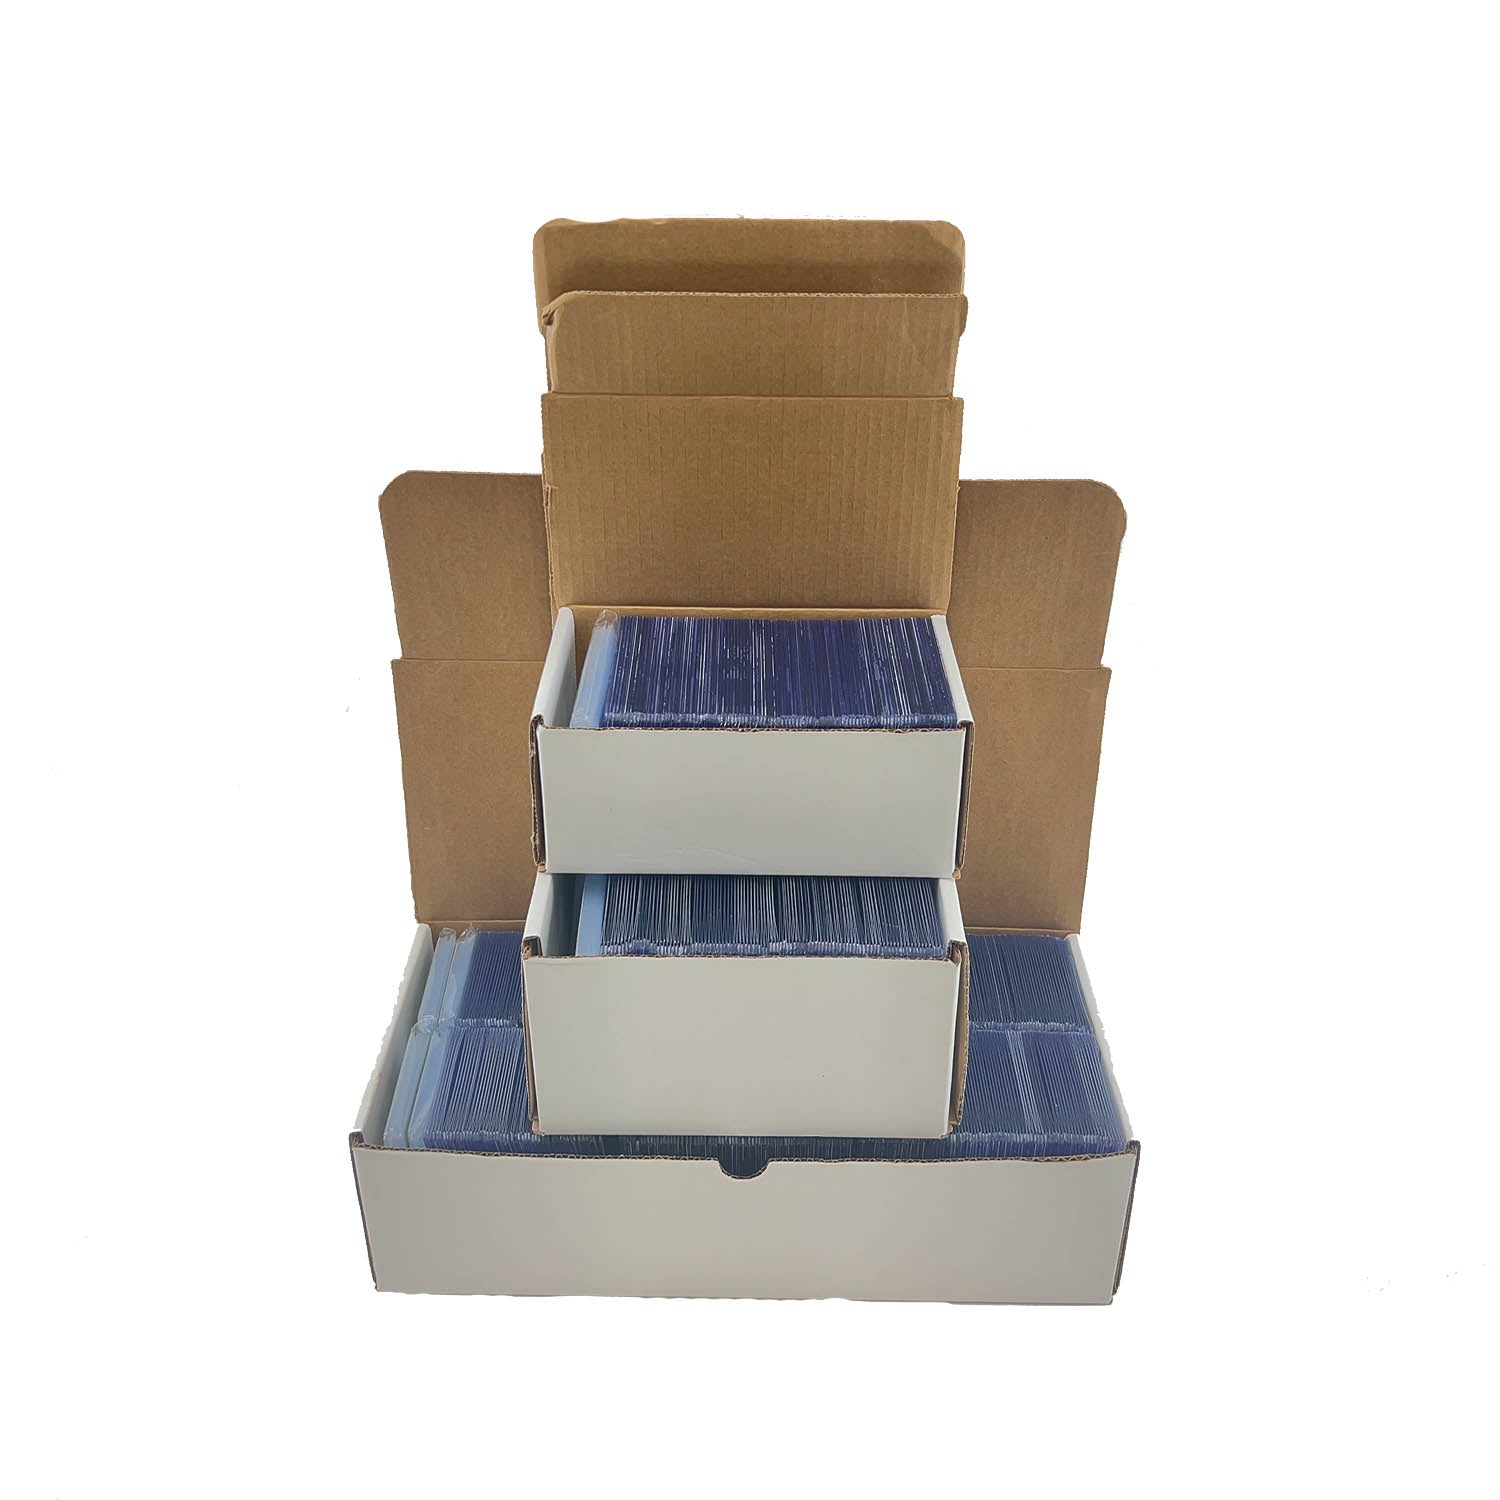 Platinum Protectors Breaker Boxes with Top Loaders & Sleeves